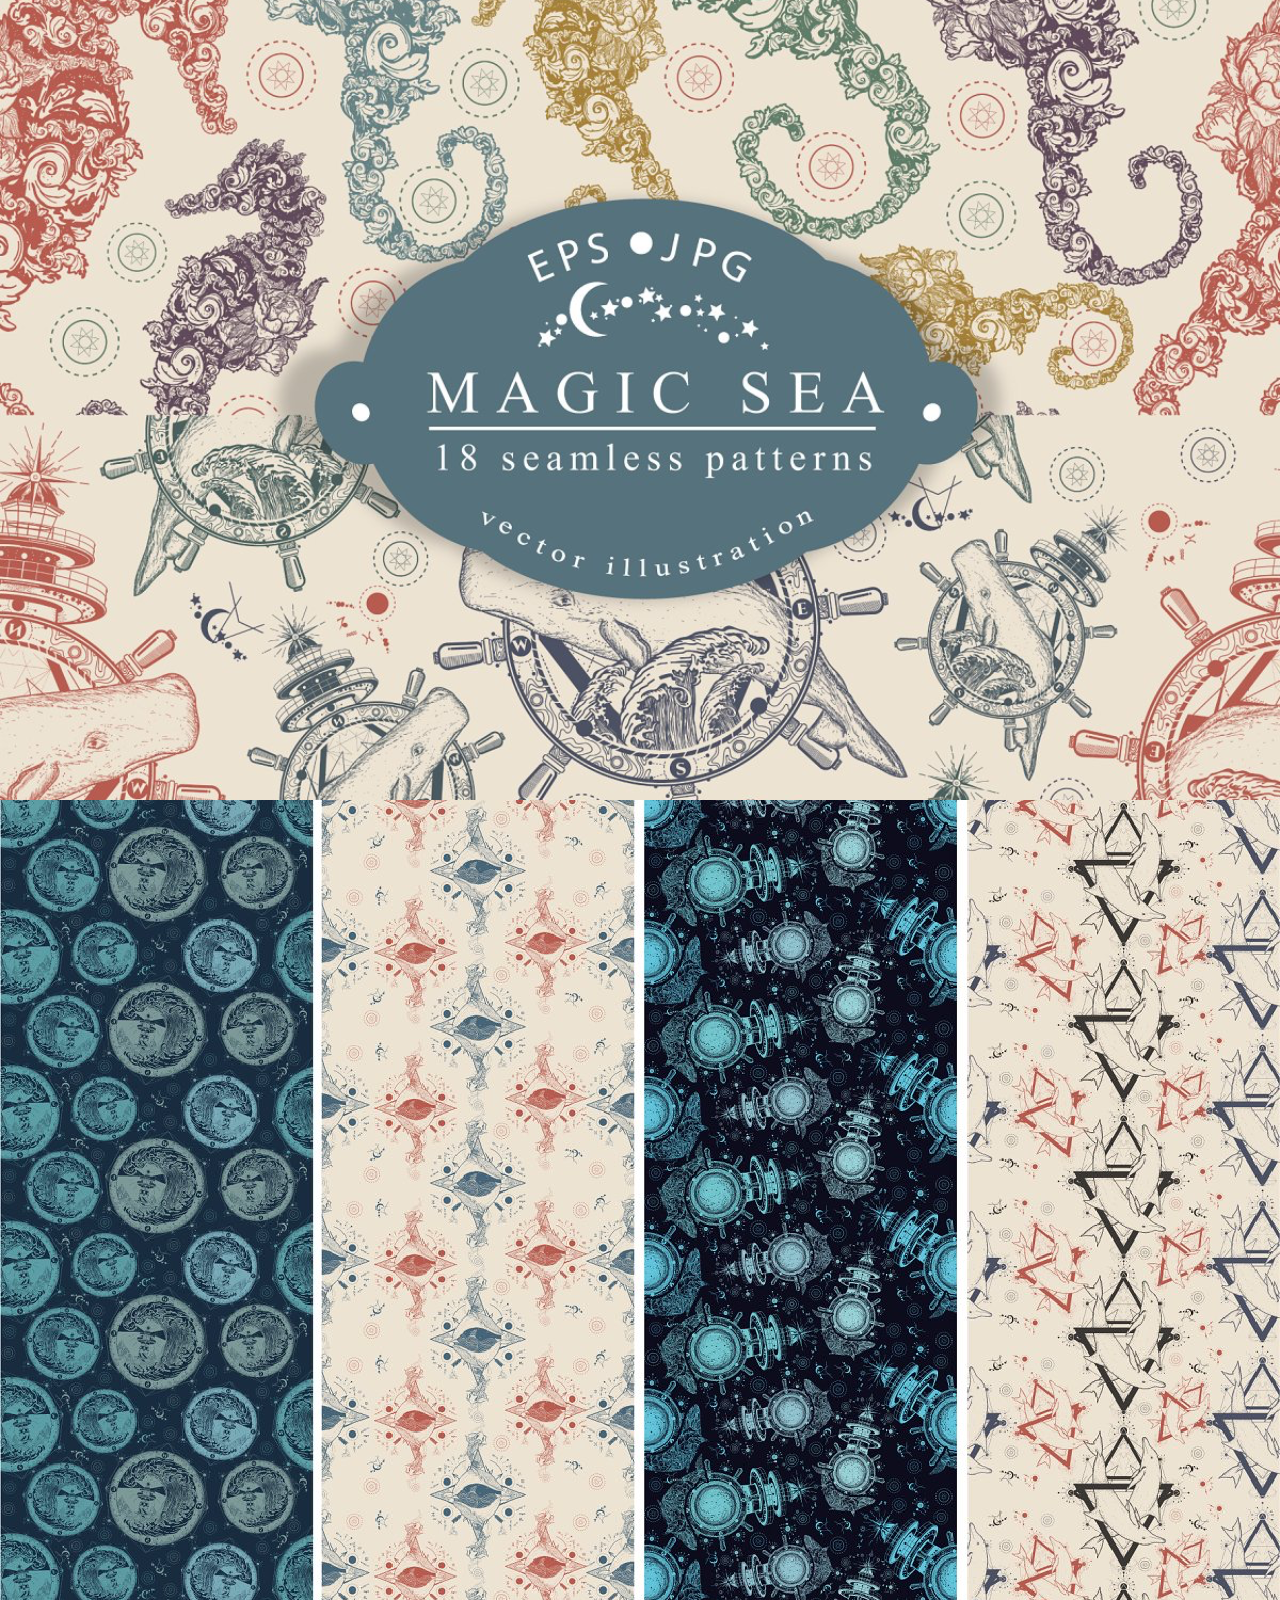 Magic sea patterns pinterest image preview.